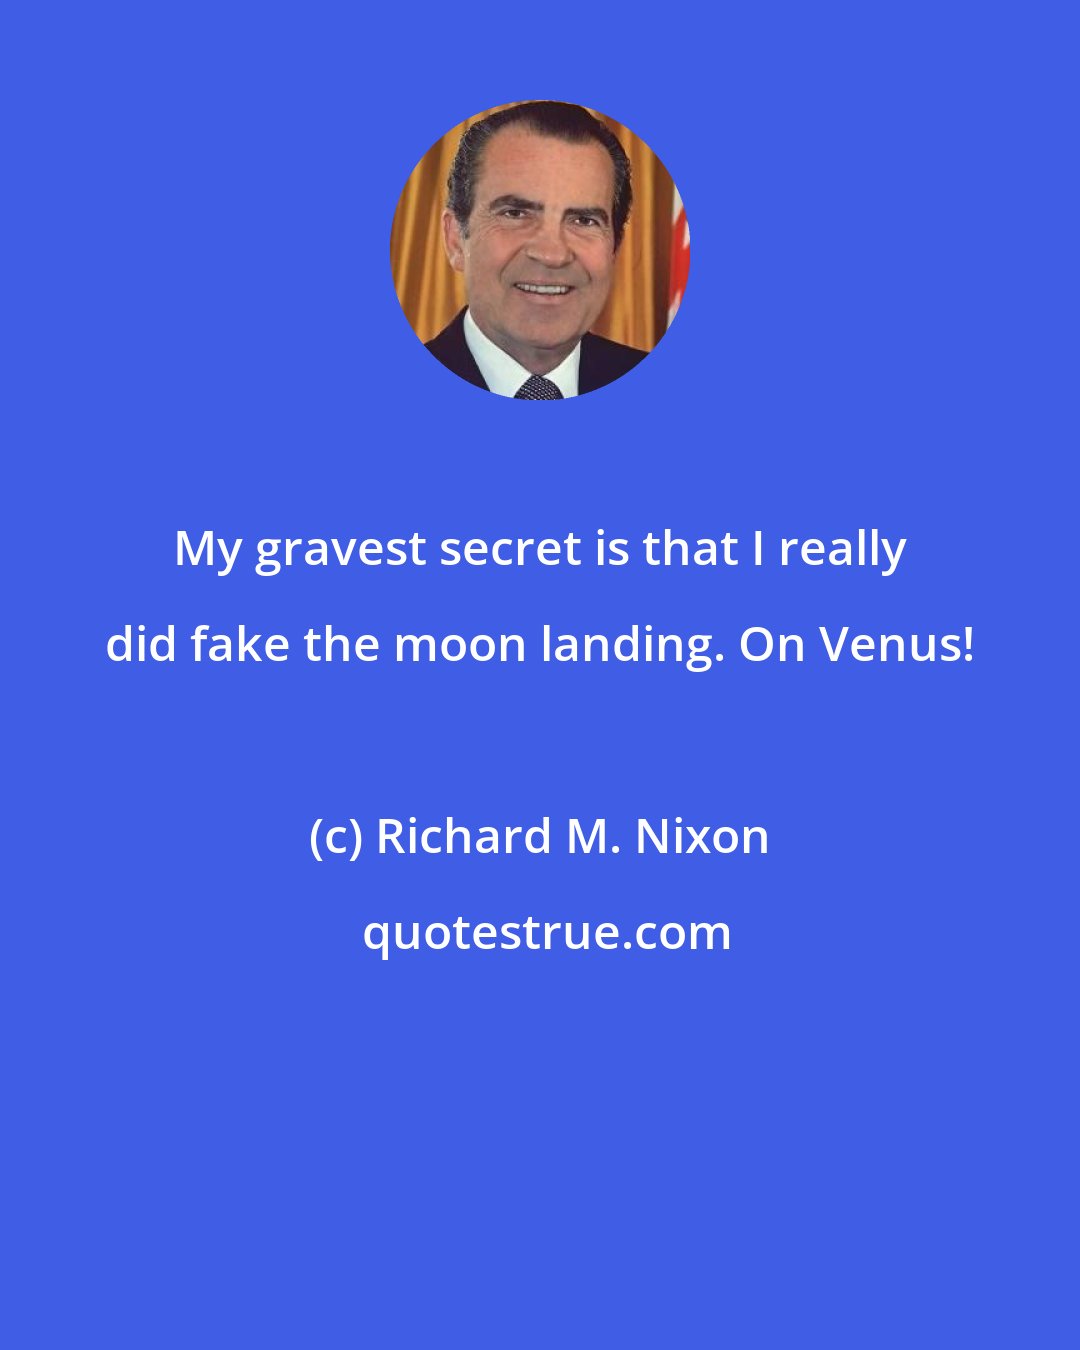 Richard M. Nixon: My gravest secret is that I really did fake the moon landing. On Venus!